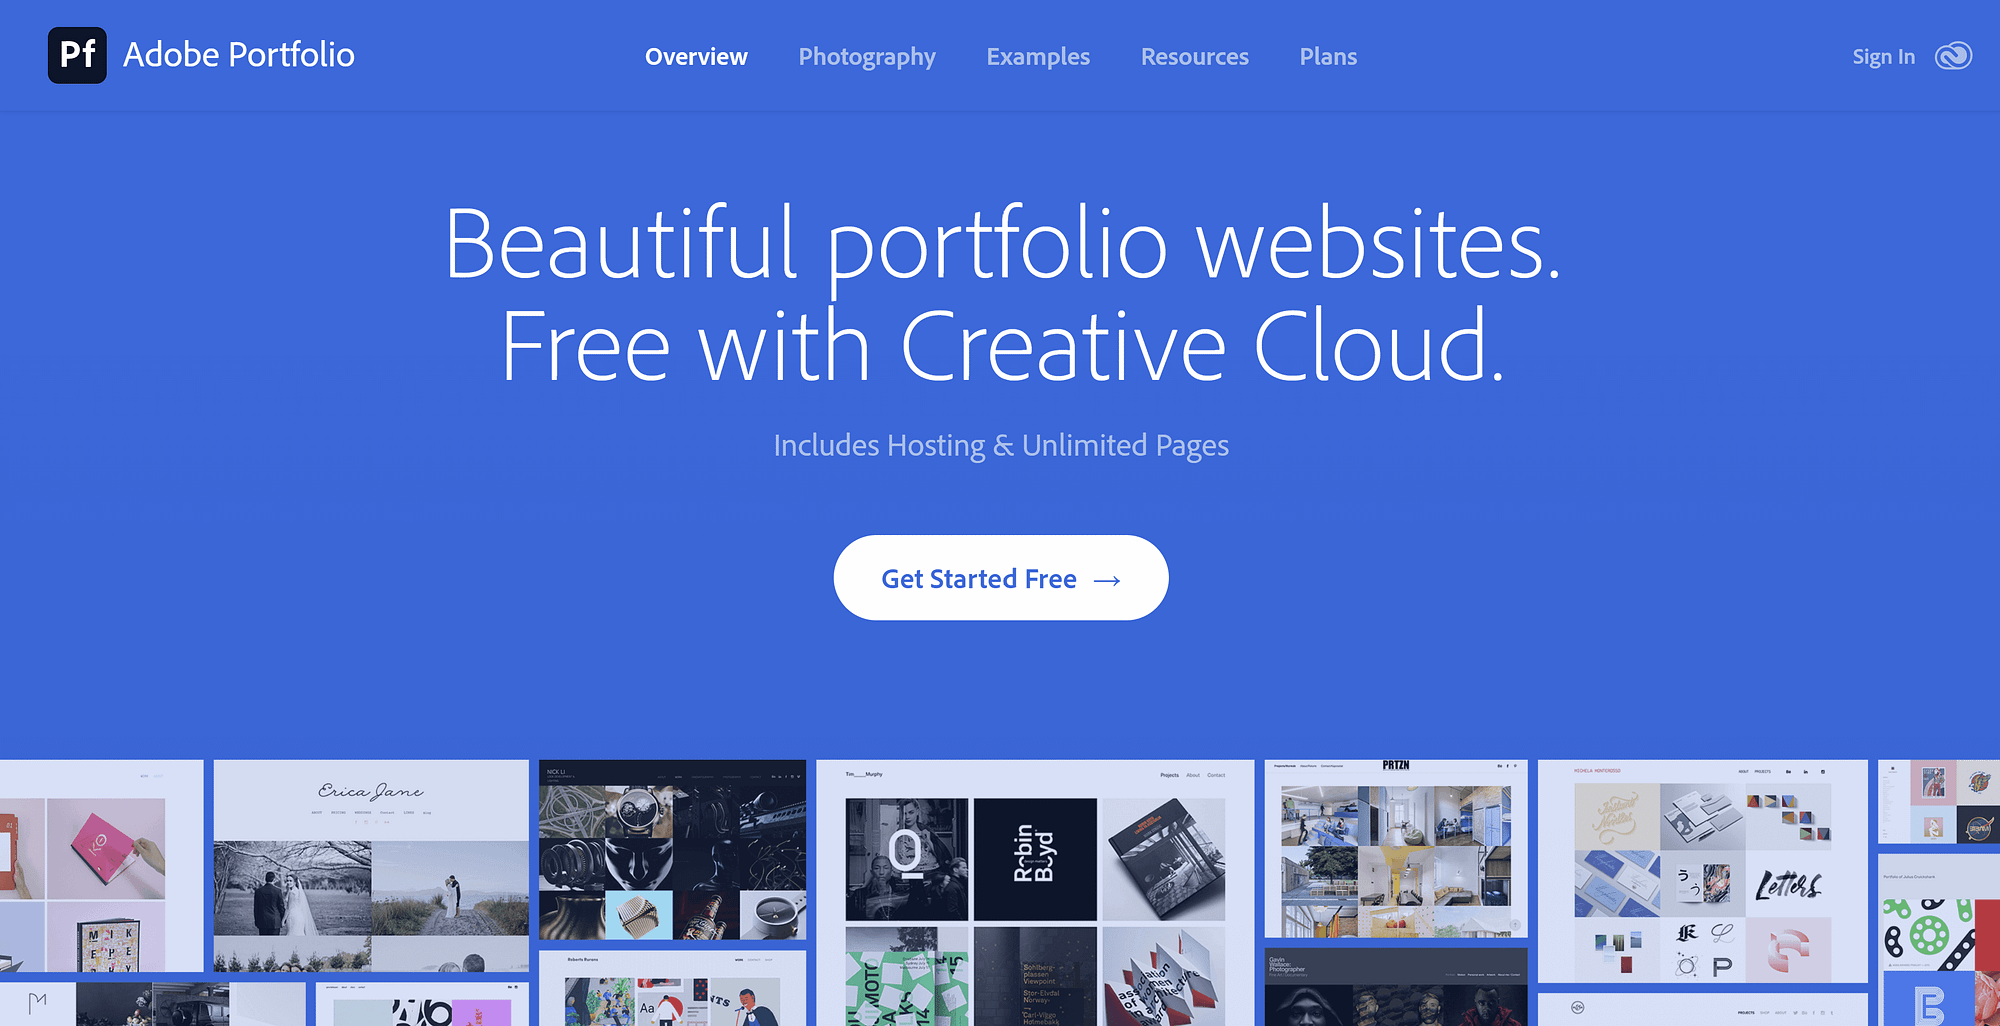 The homepage for Adobe Portfolio.